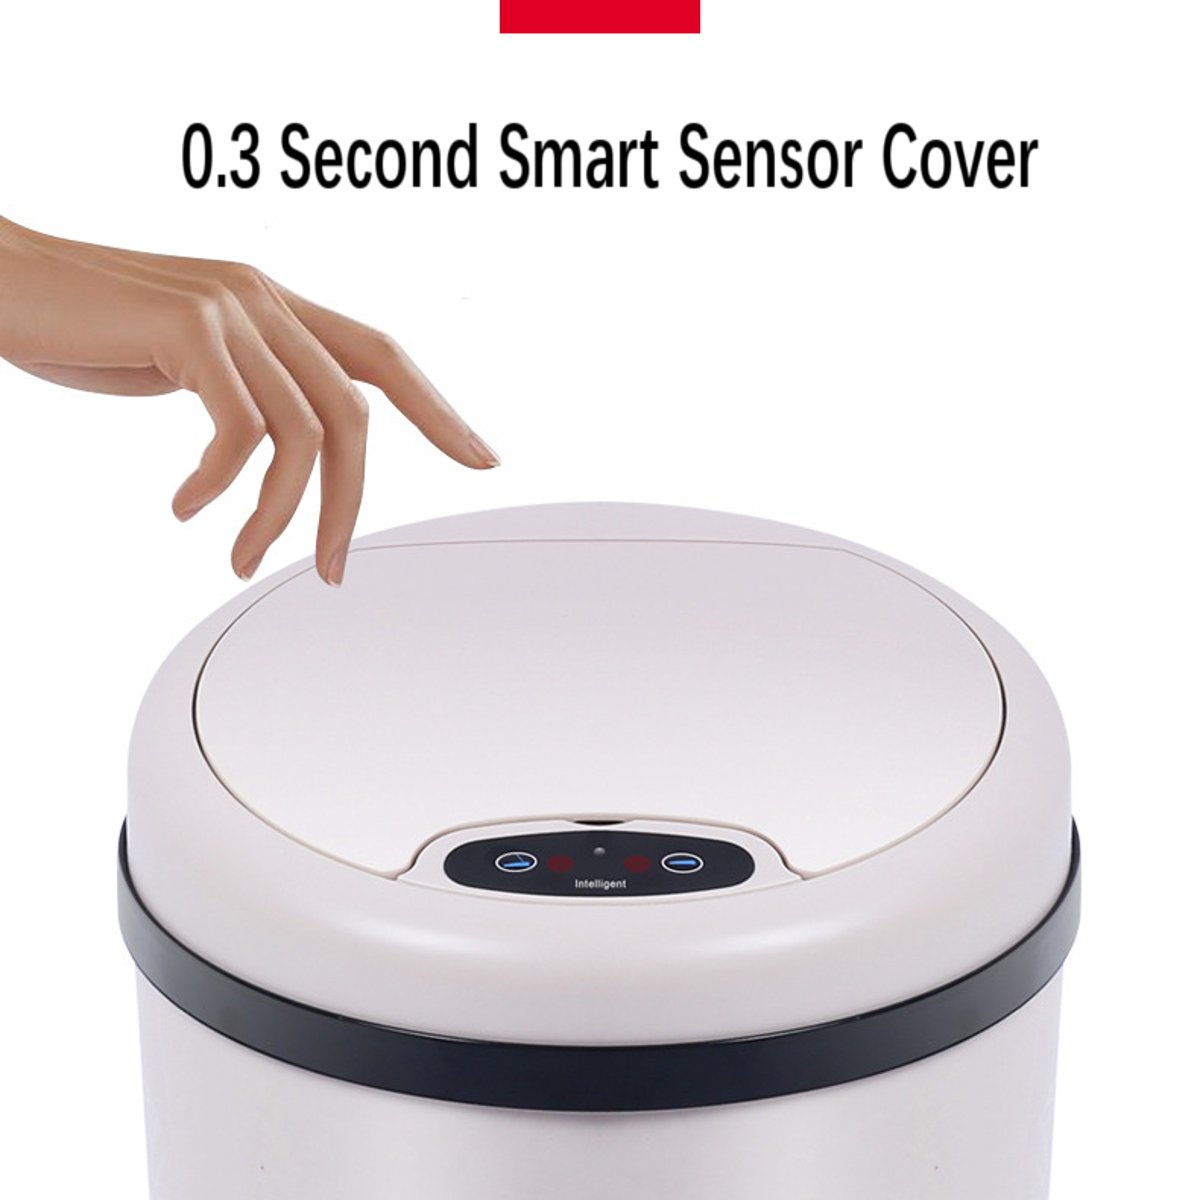 9L11L-Automatic-Infrared-Sensor-Dustbin-Smart-Sensor-Trash-Can-Induction-Waste-Bins-1477368